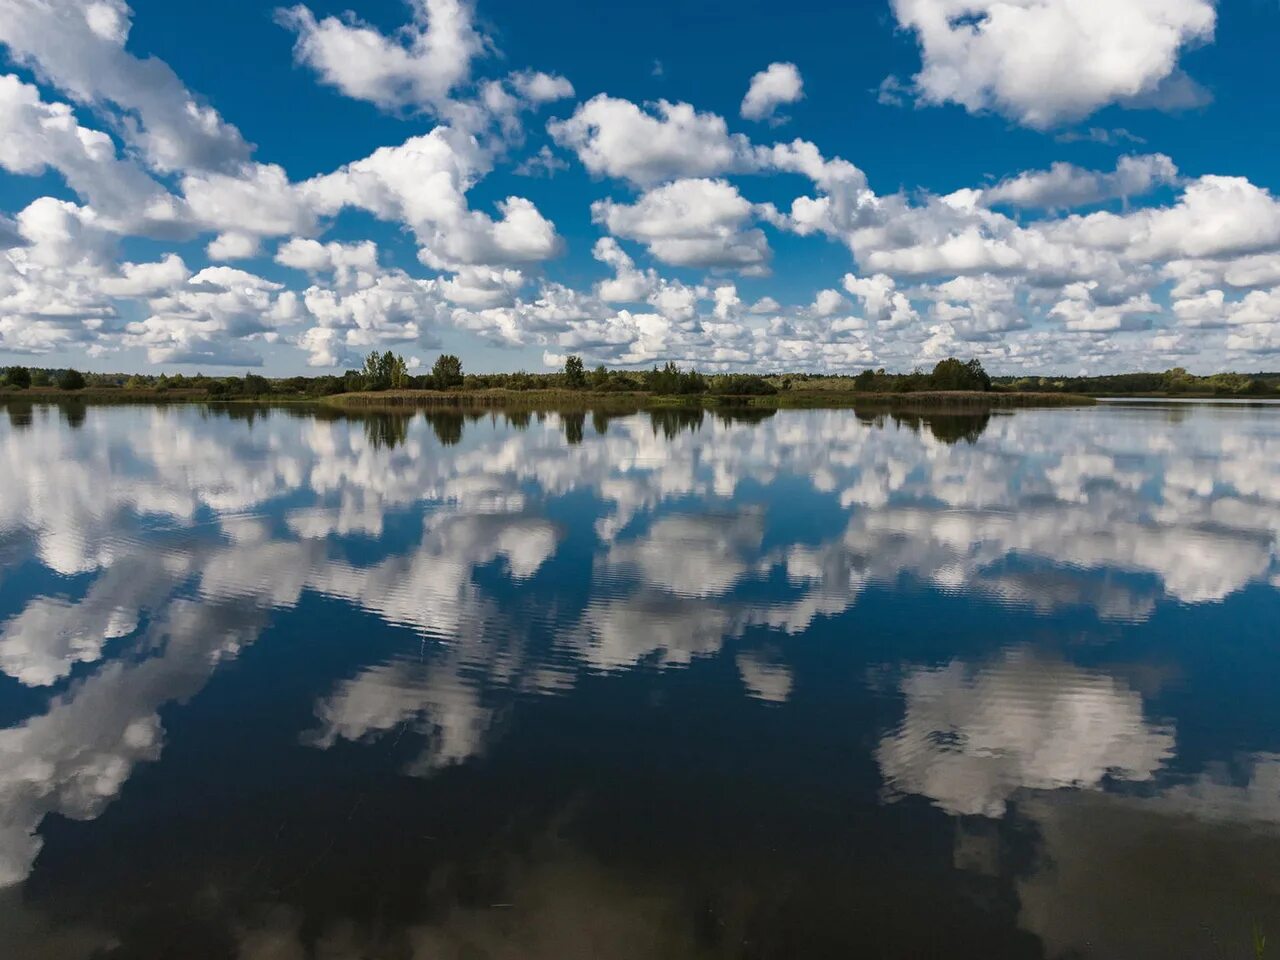 В реку смотрят облака. Отражение неба в воде. Отражение облаков в воде. Облака в реке. Озеро небо.